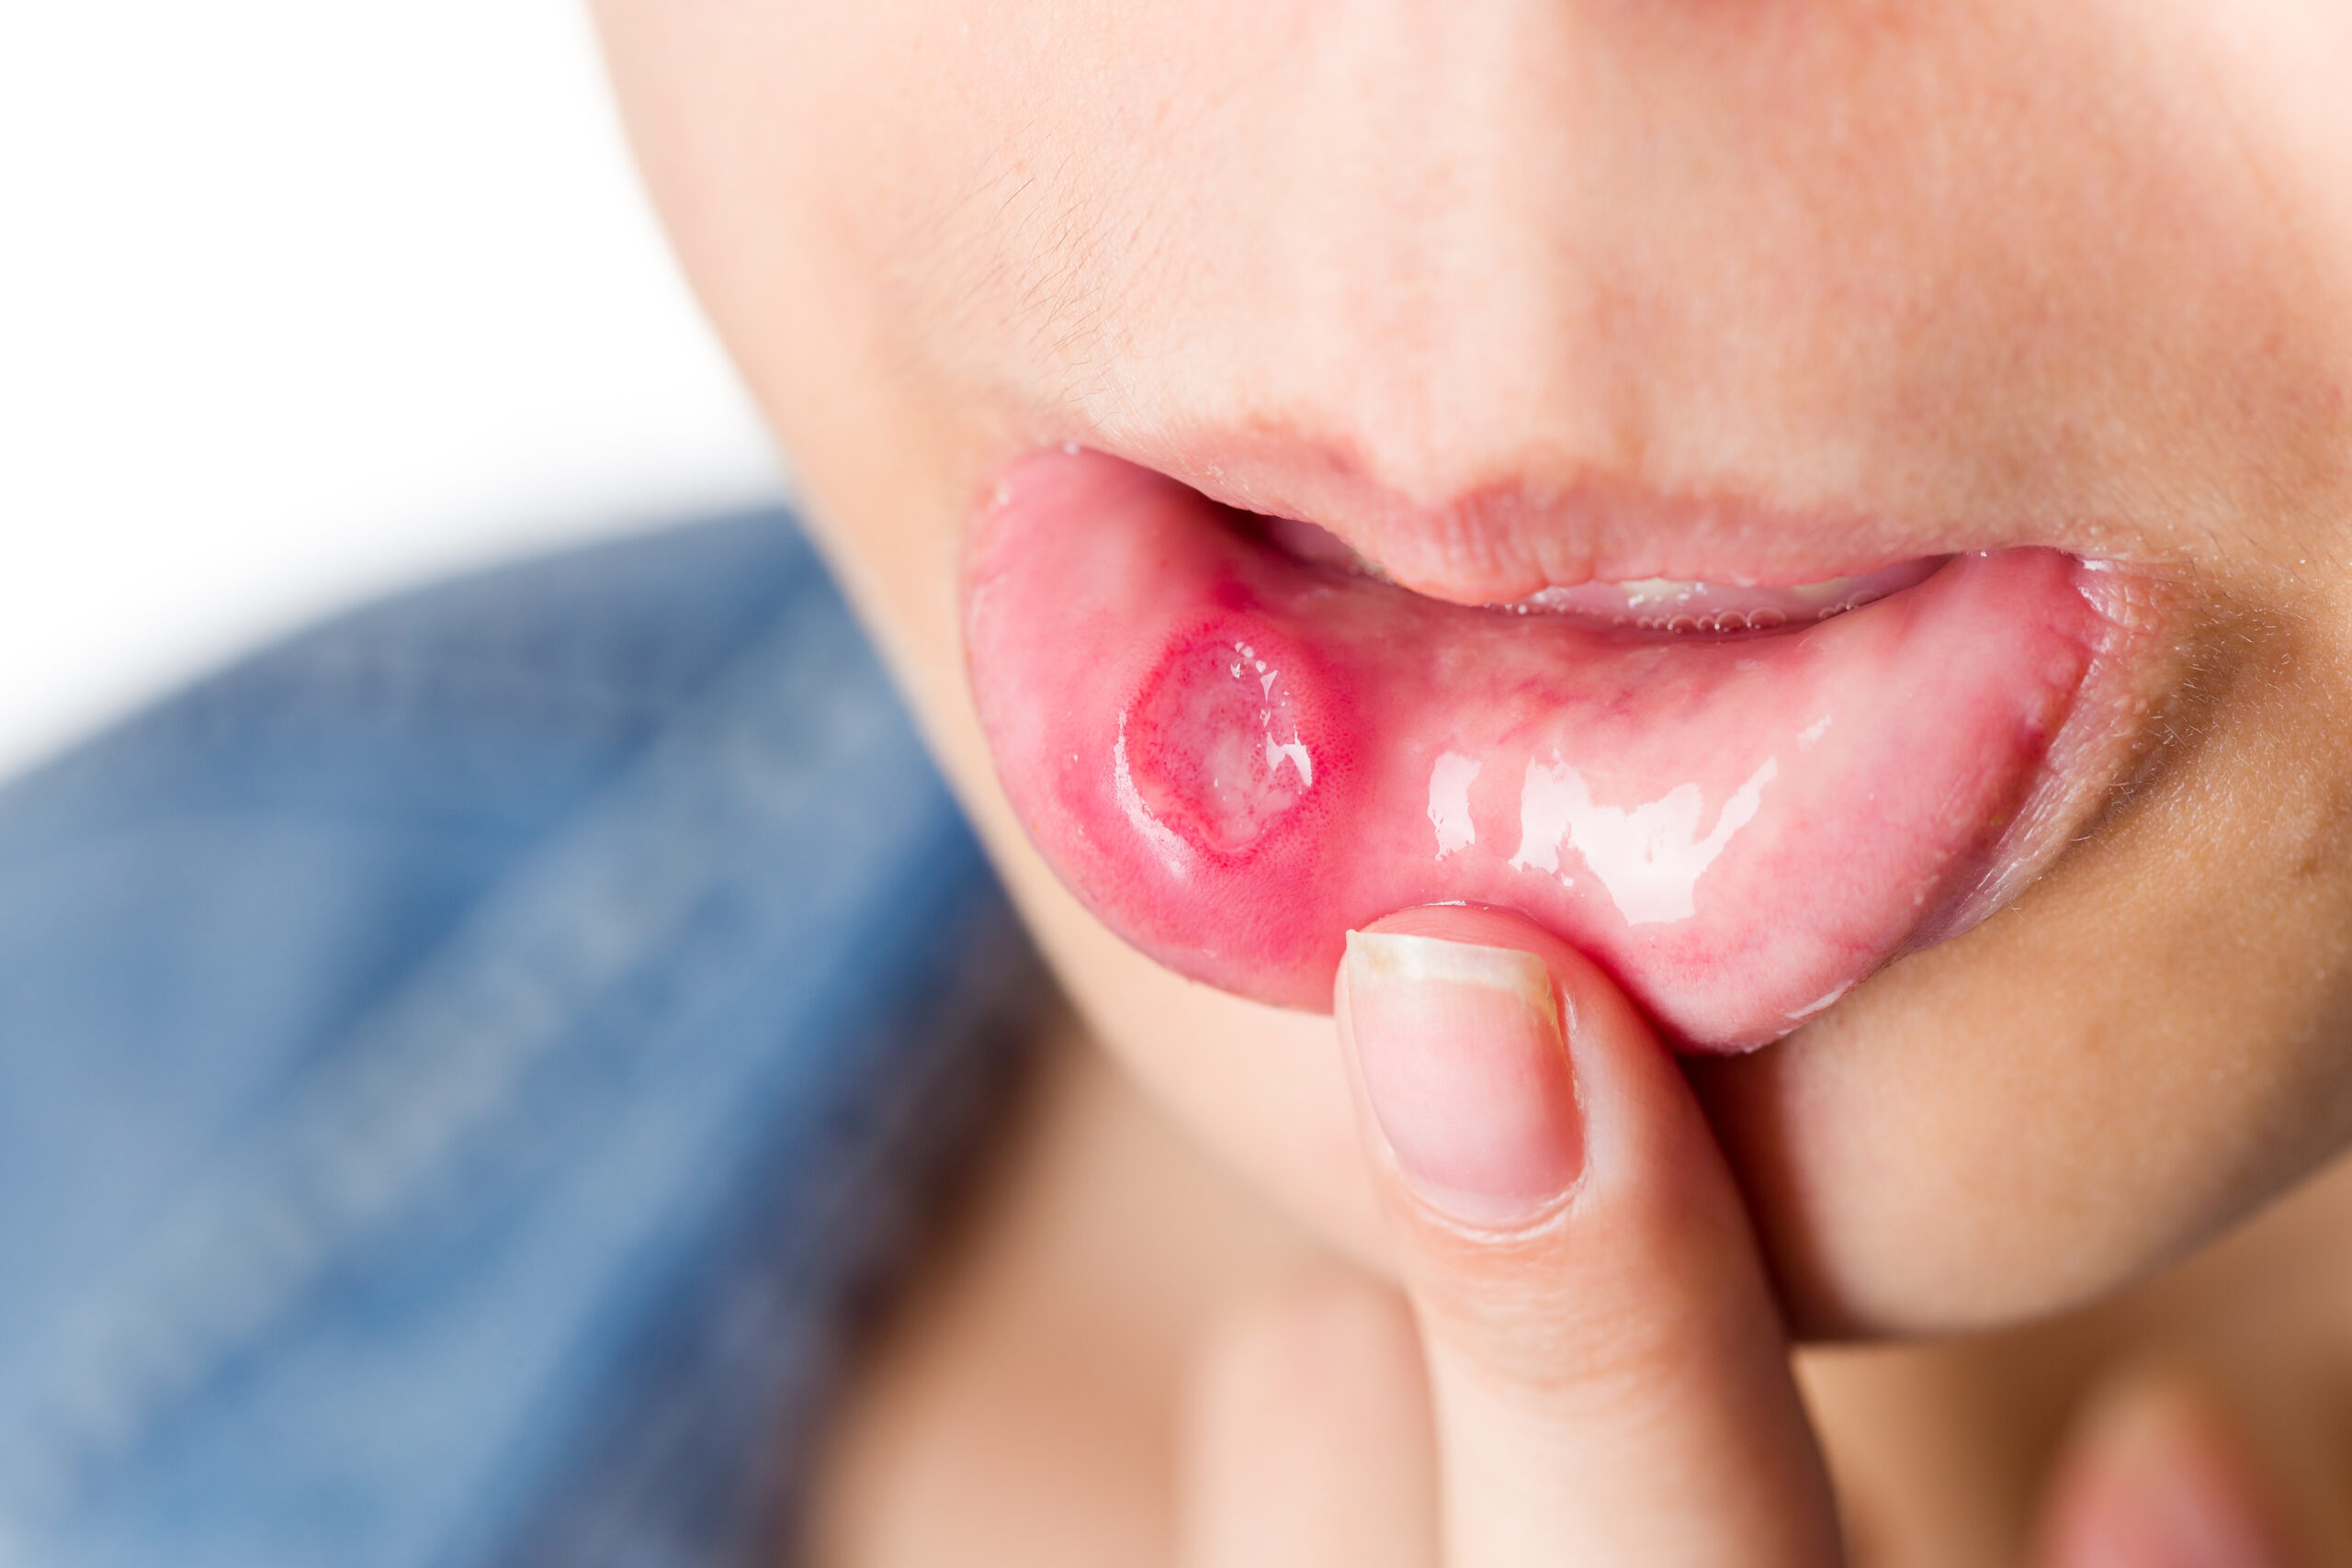 Oral herpes symptom pictures